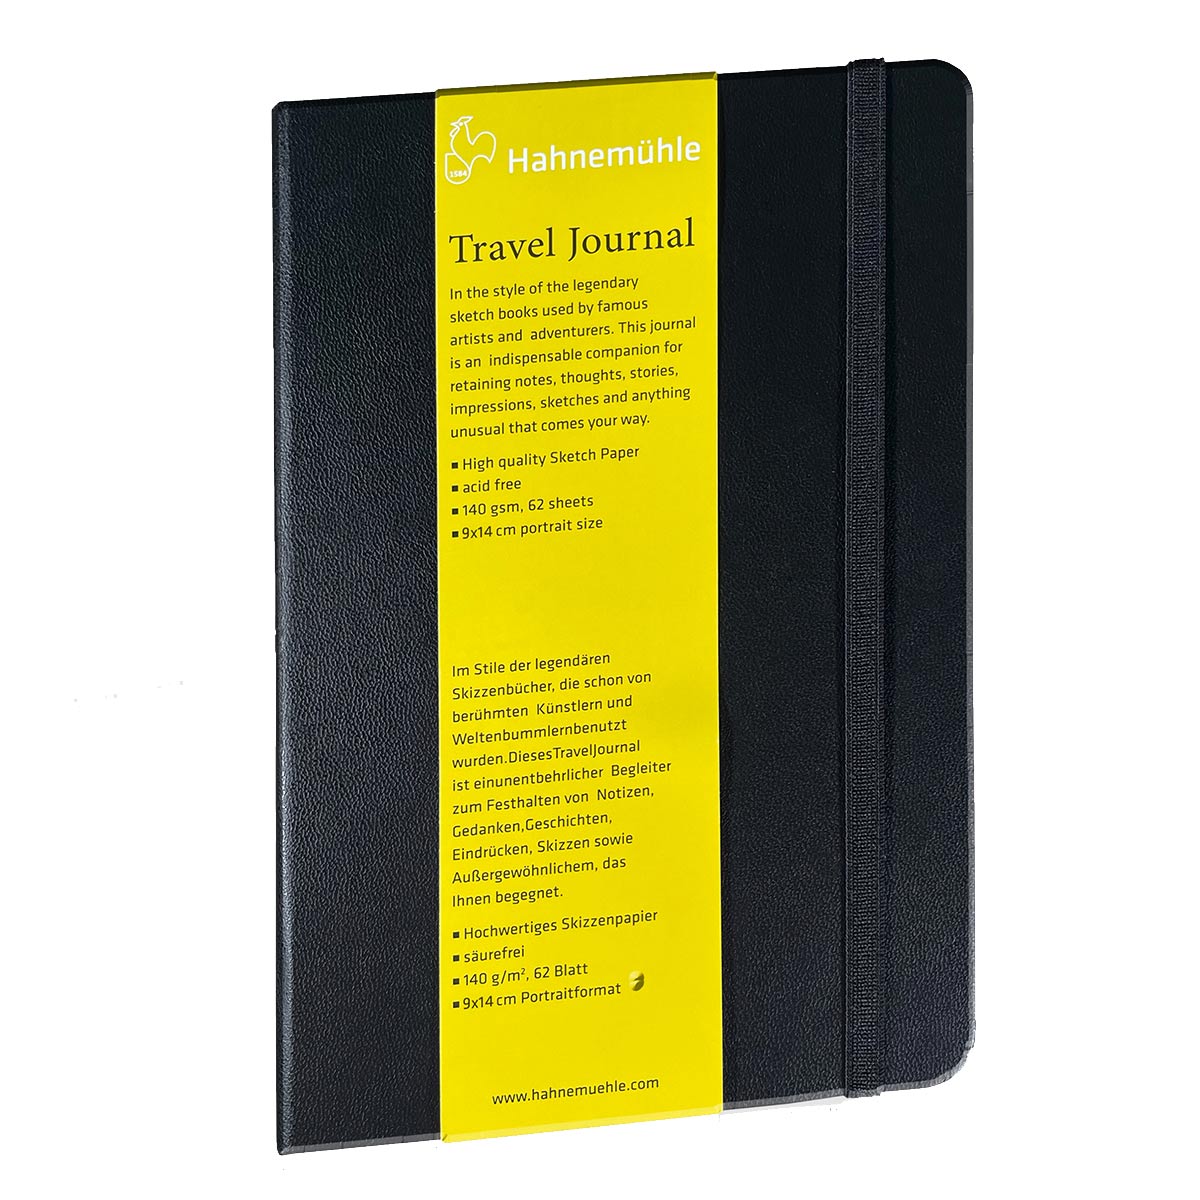 Hahnemuhle - Travel Journal 140GSM 62 fogli 9x14cm - Ritratto